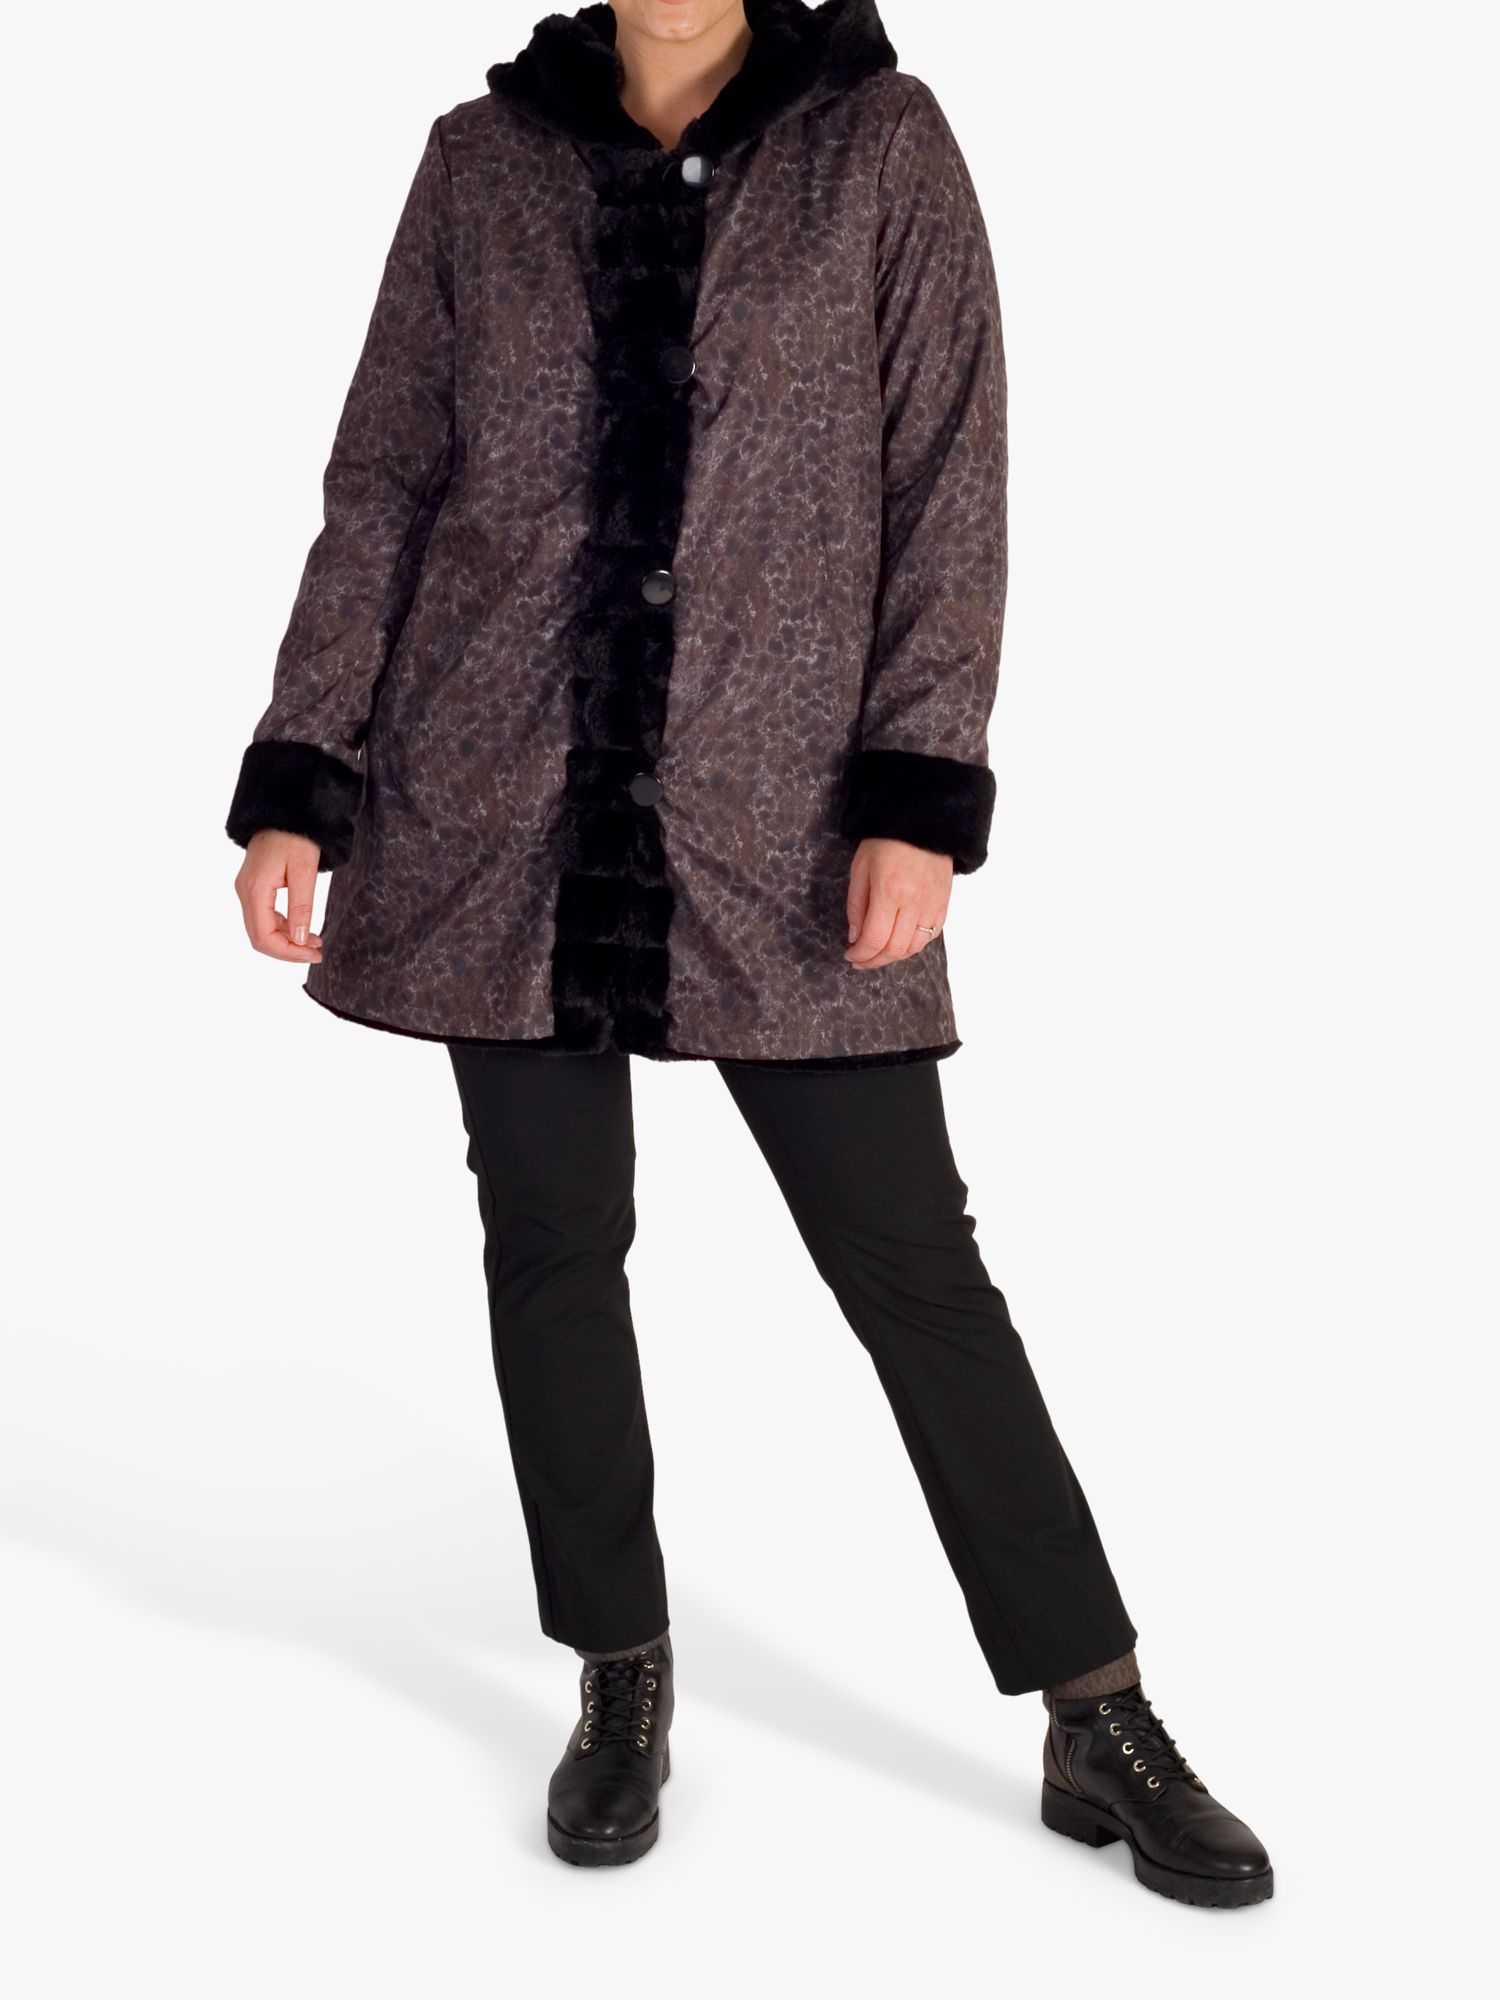 Chesca Animal Spot Print Reversible Faux Fur Coat, Brown/Black